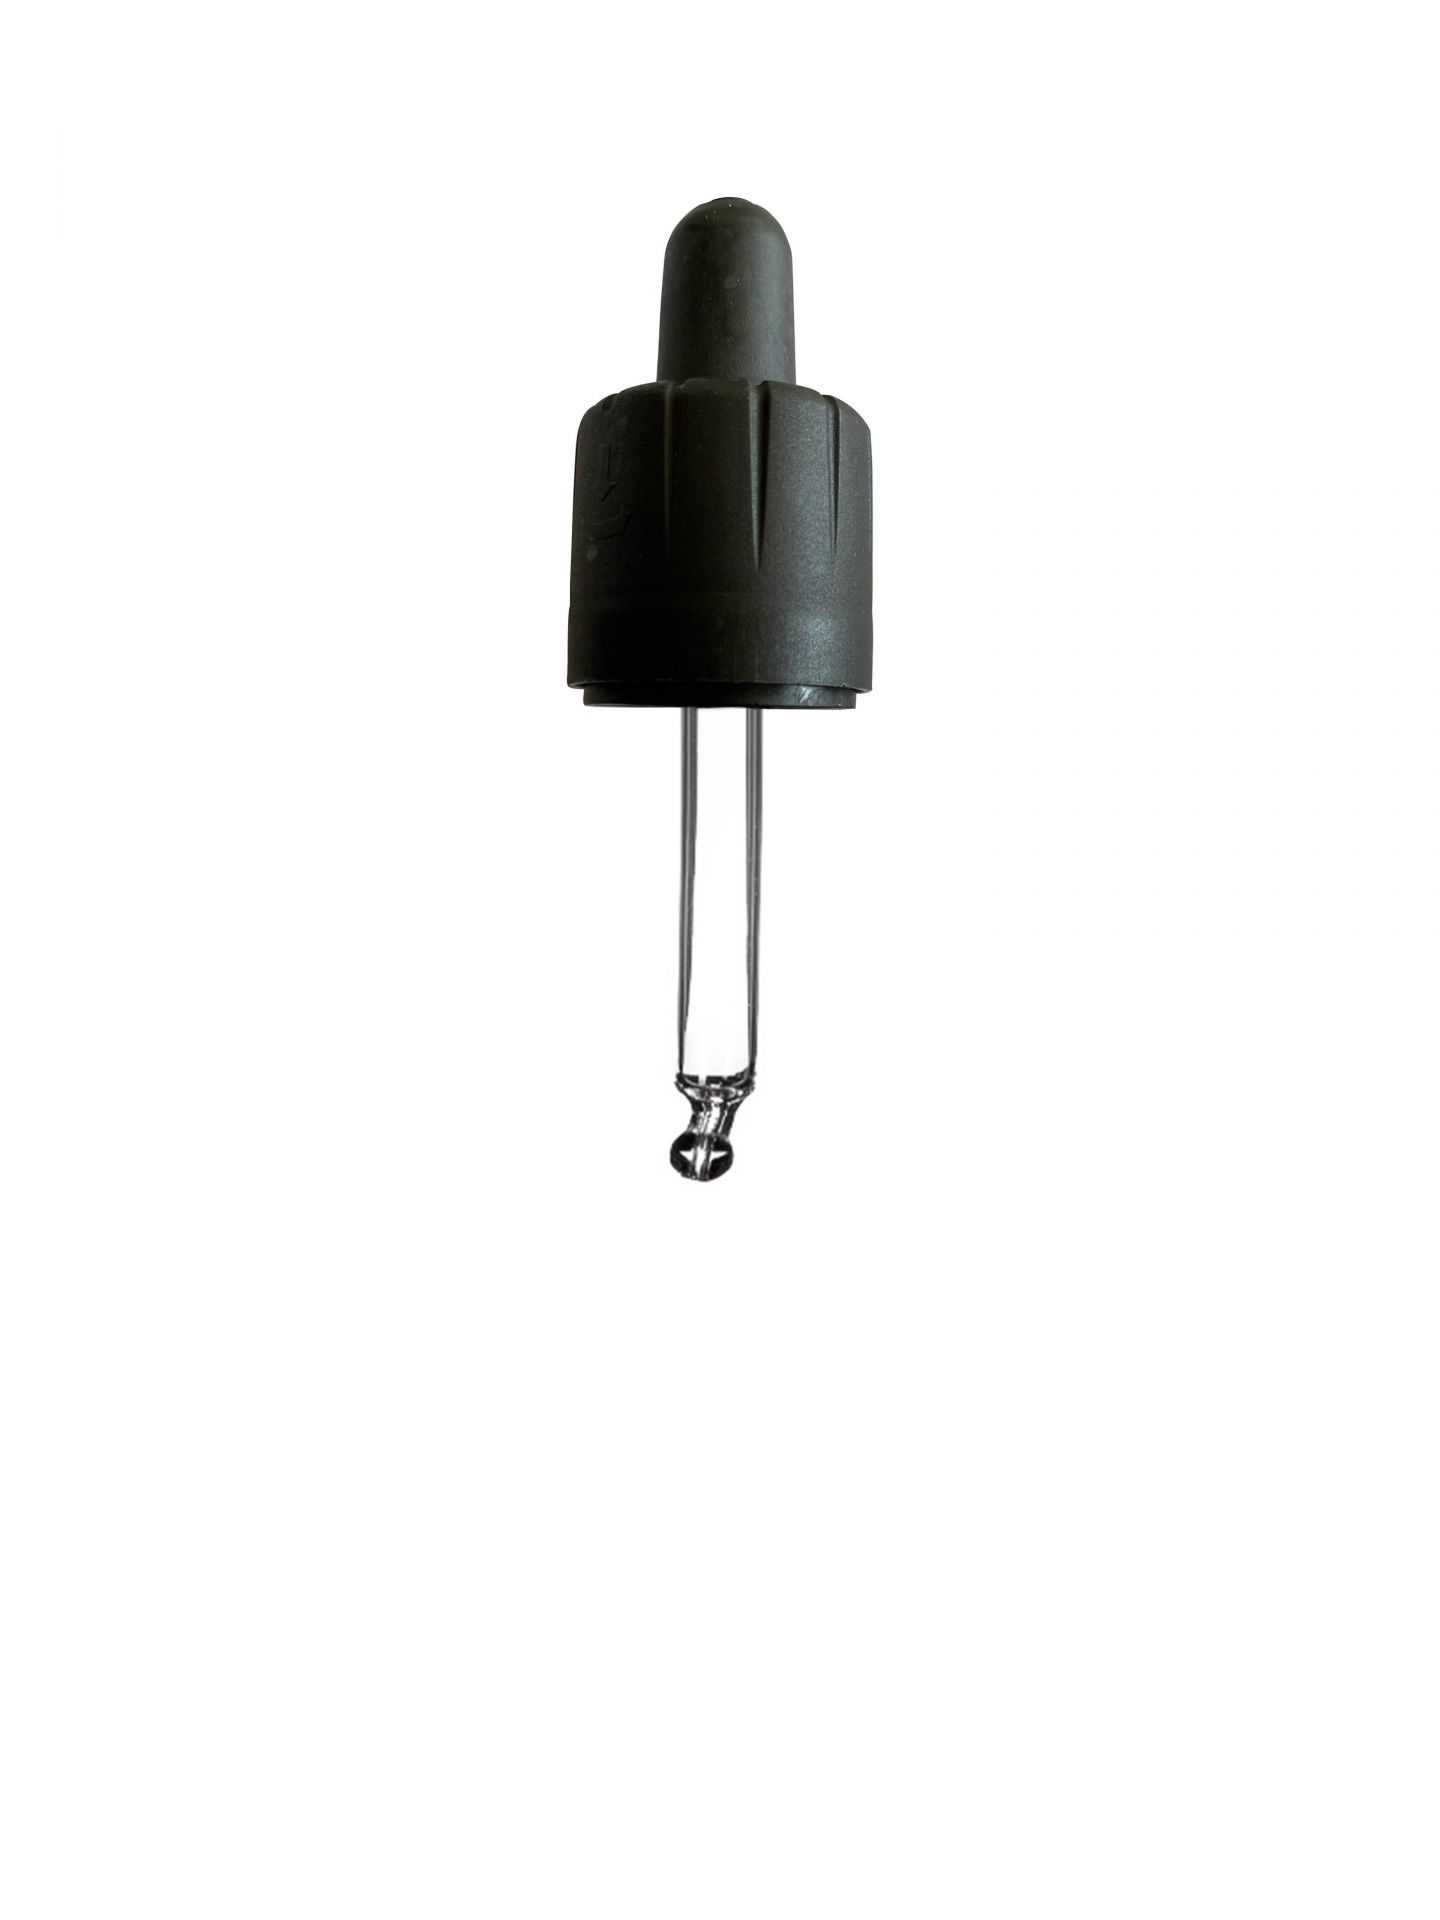 Pipette child-tamper evident DIN18, II, black, bulb TPE, dose 0.7ml, bent ball tip (Orion 10-63)   